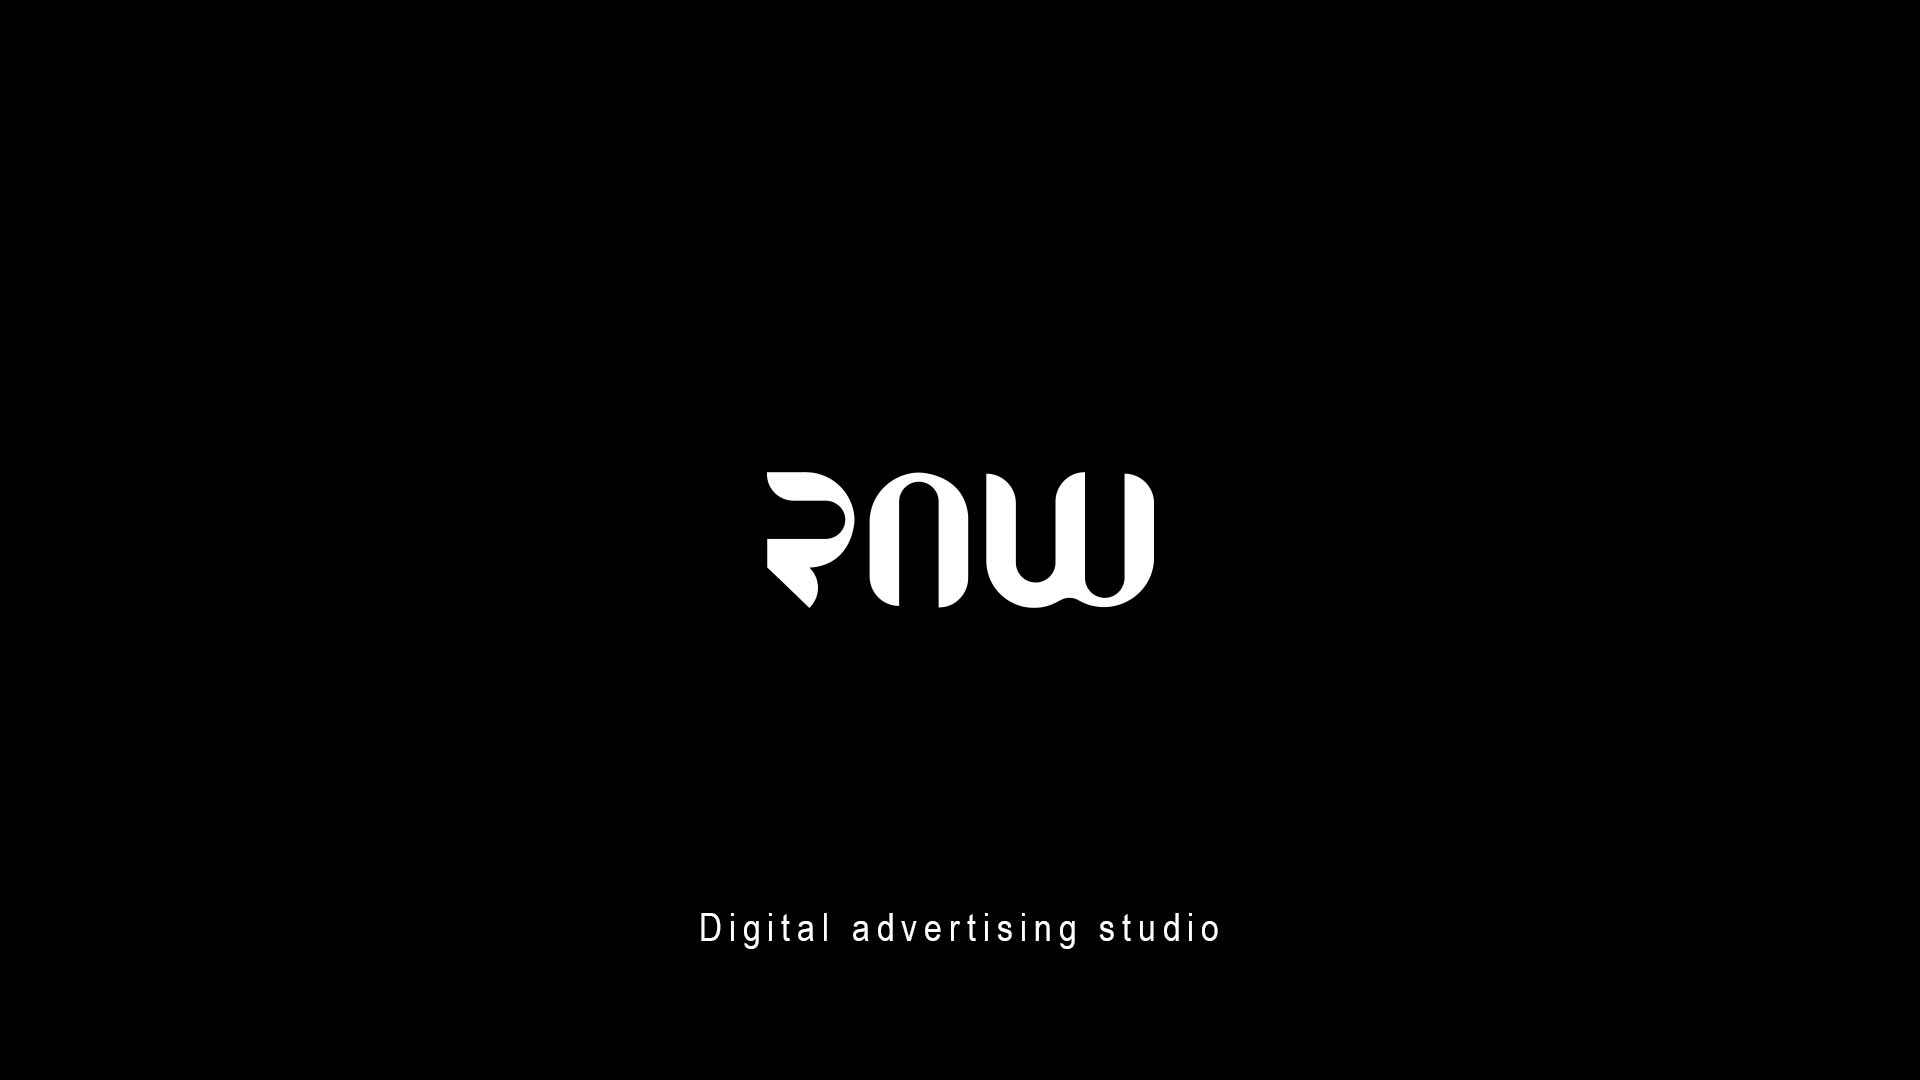 raw studio is a digital advertising studio